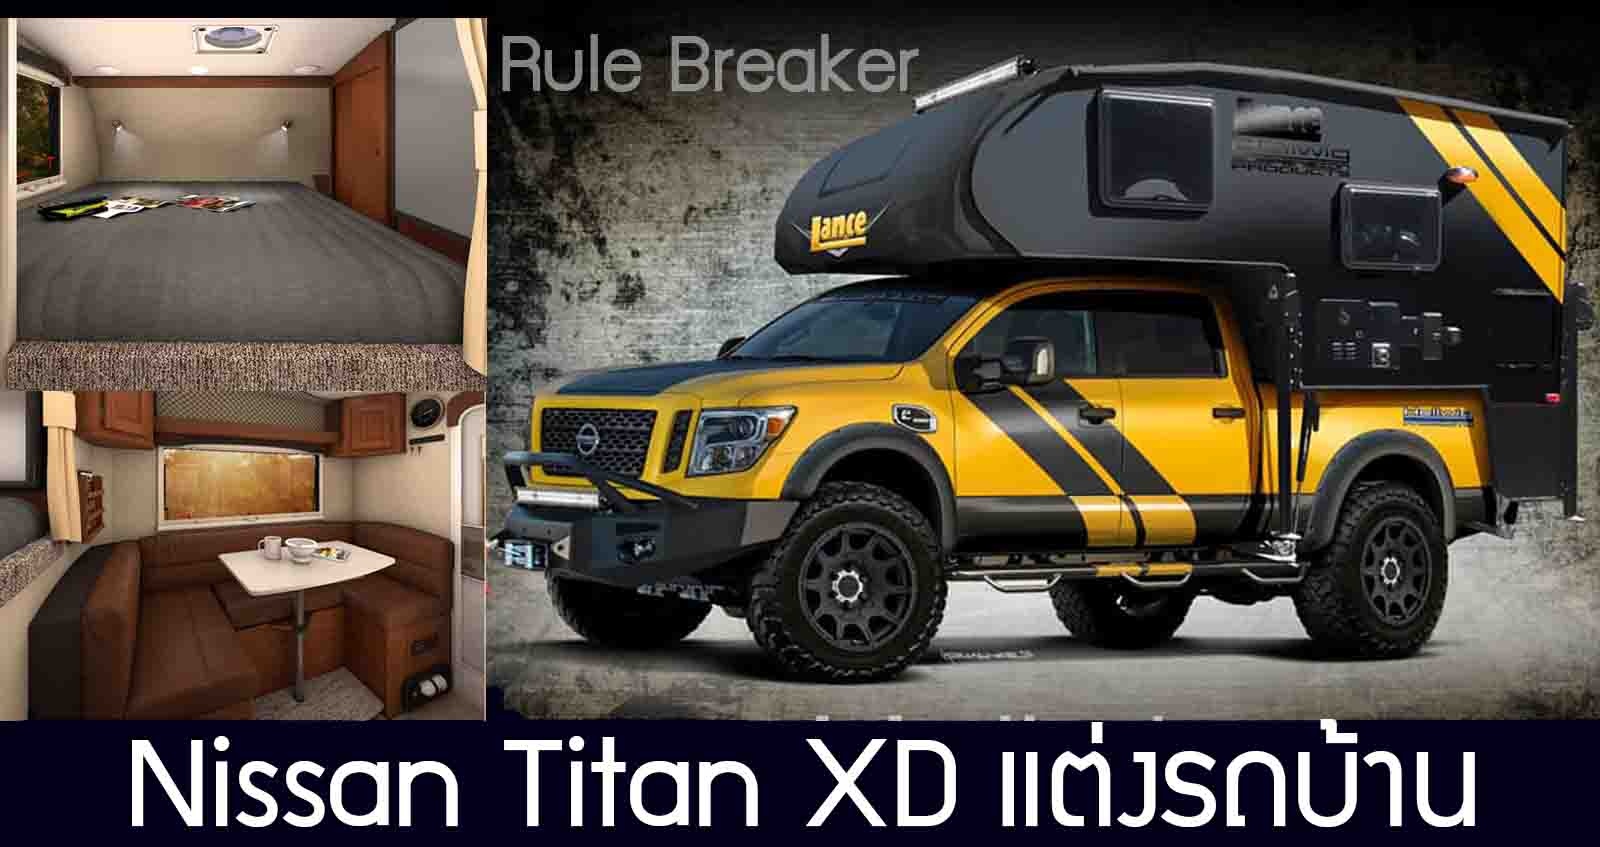 Nissan Titan XD แต่งรถบ้าน Rule Breaker